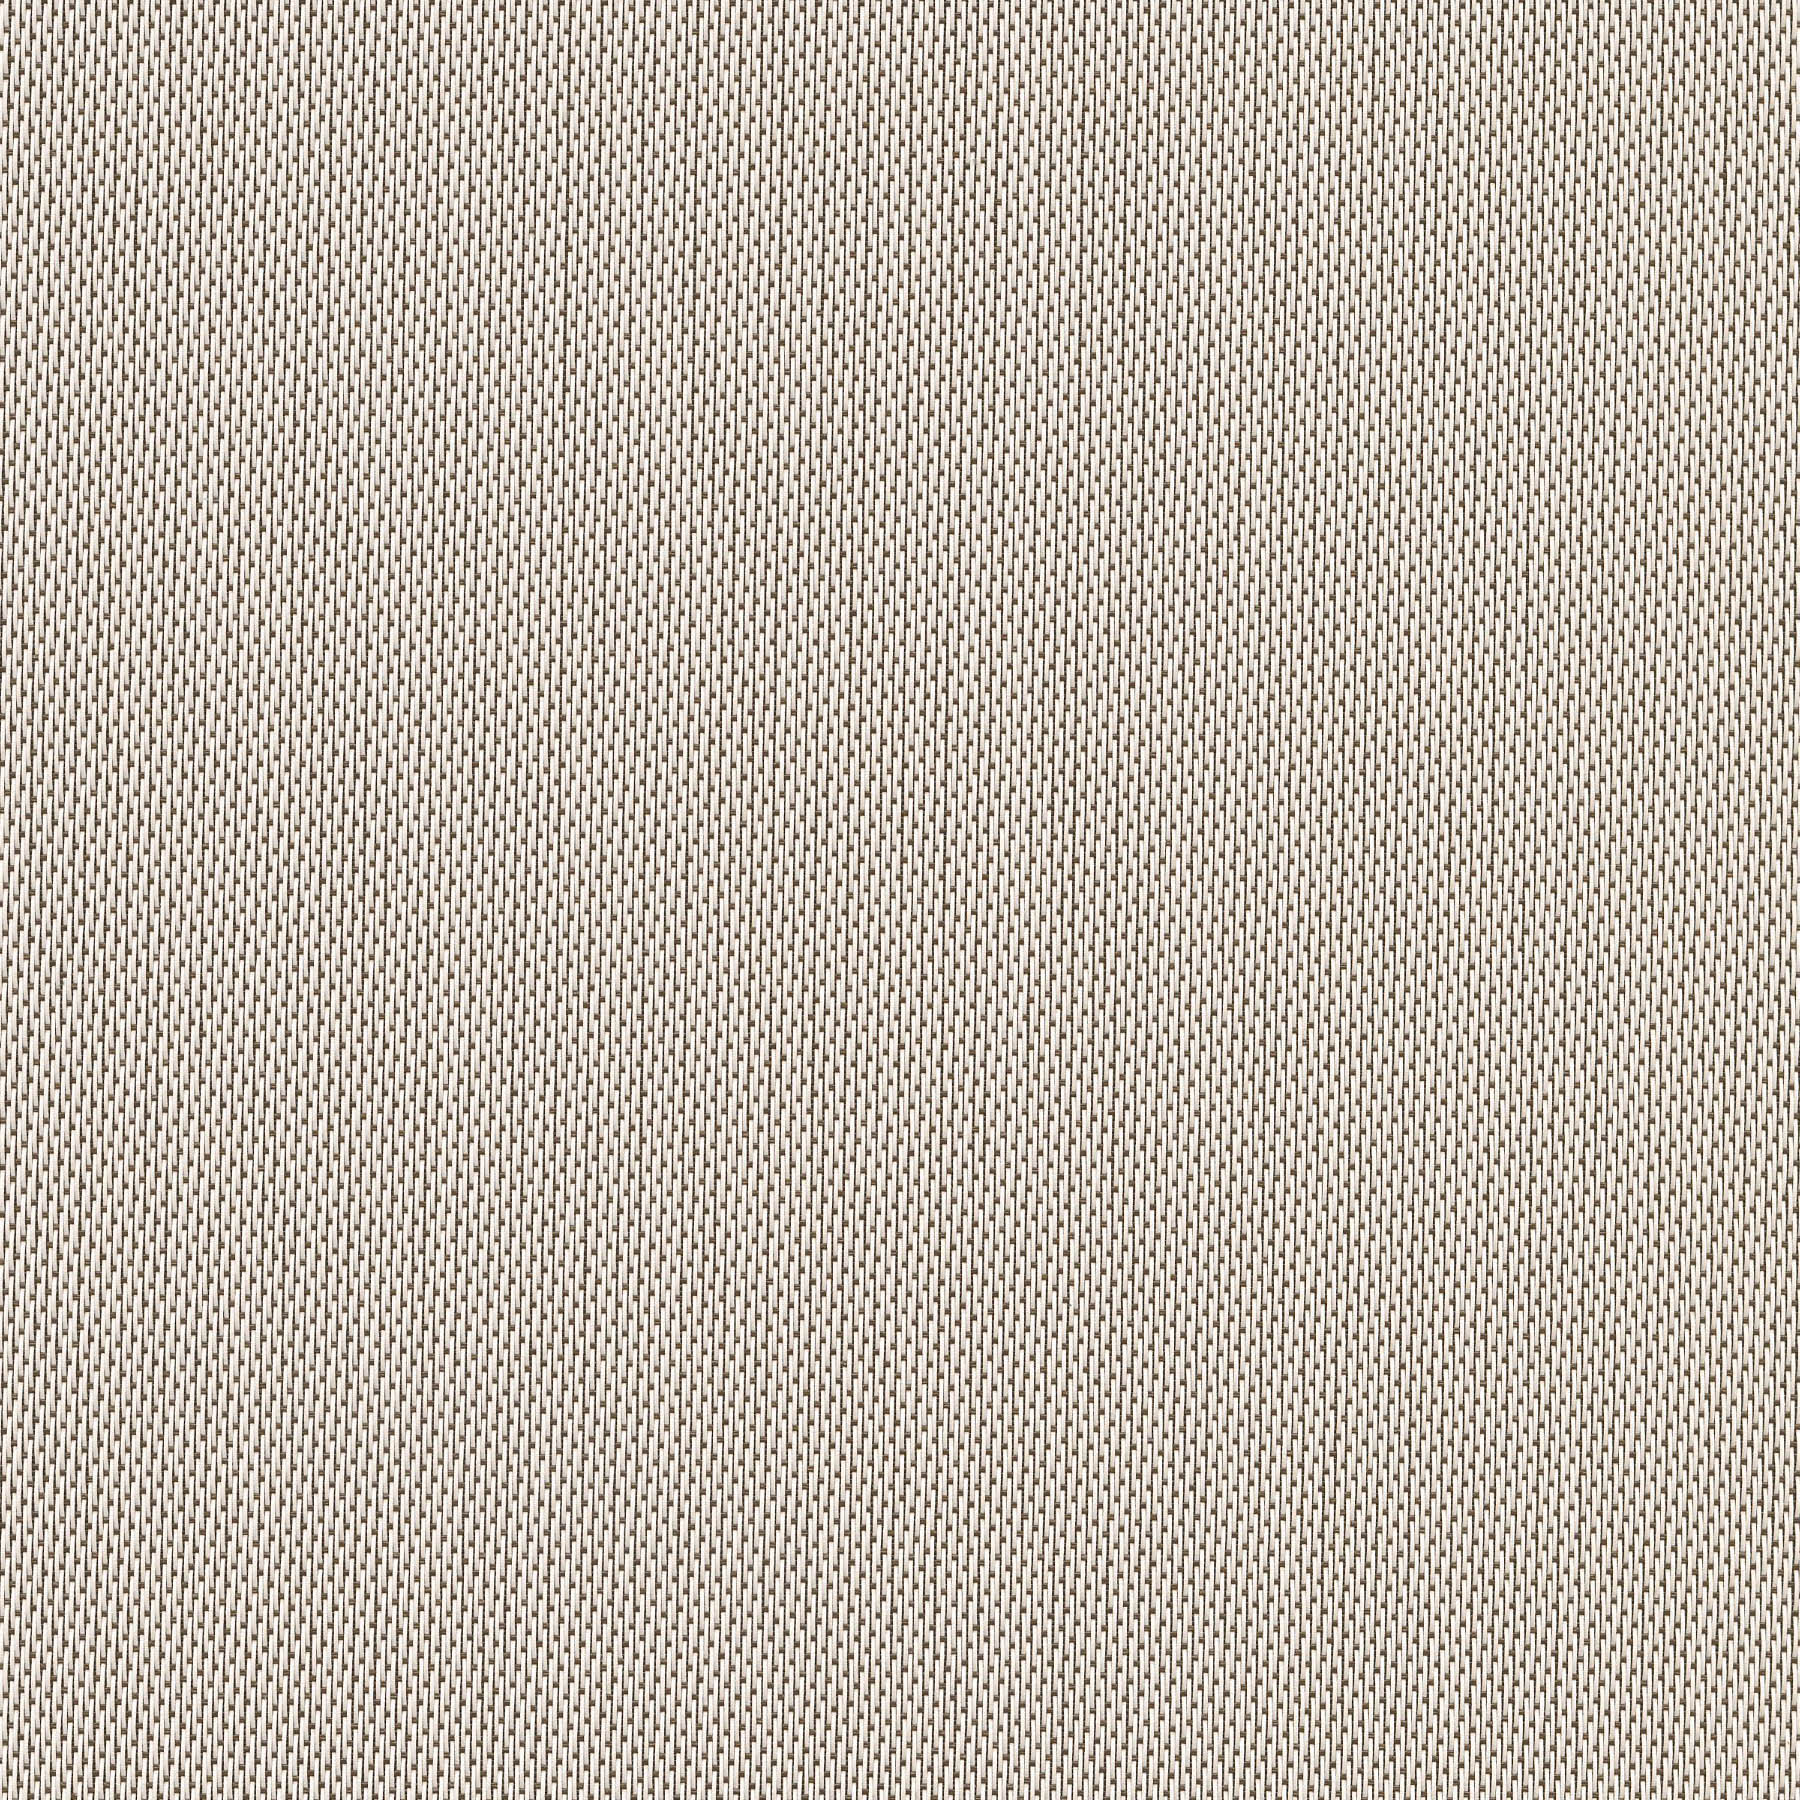 Altex - Fabric - SHEERWEAVE 2701 - Chestnut/White - 154